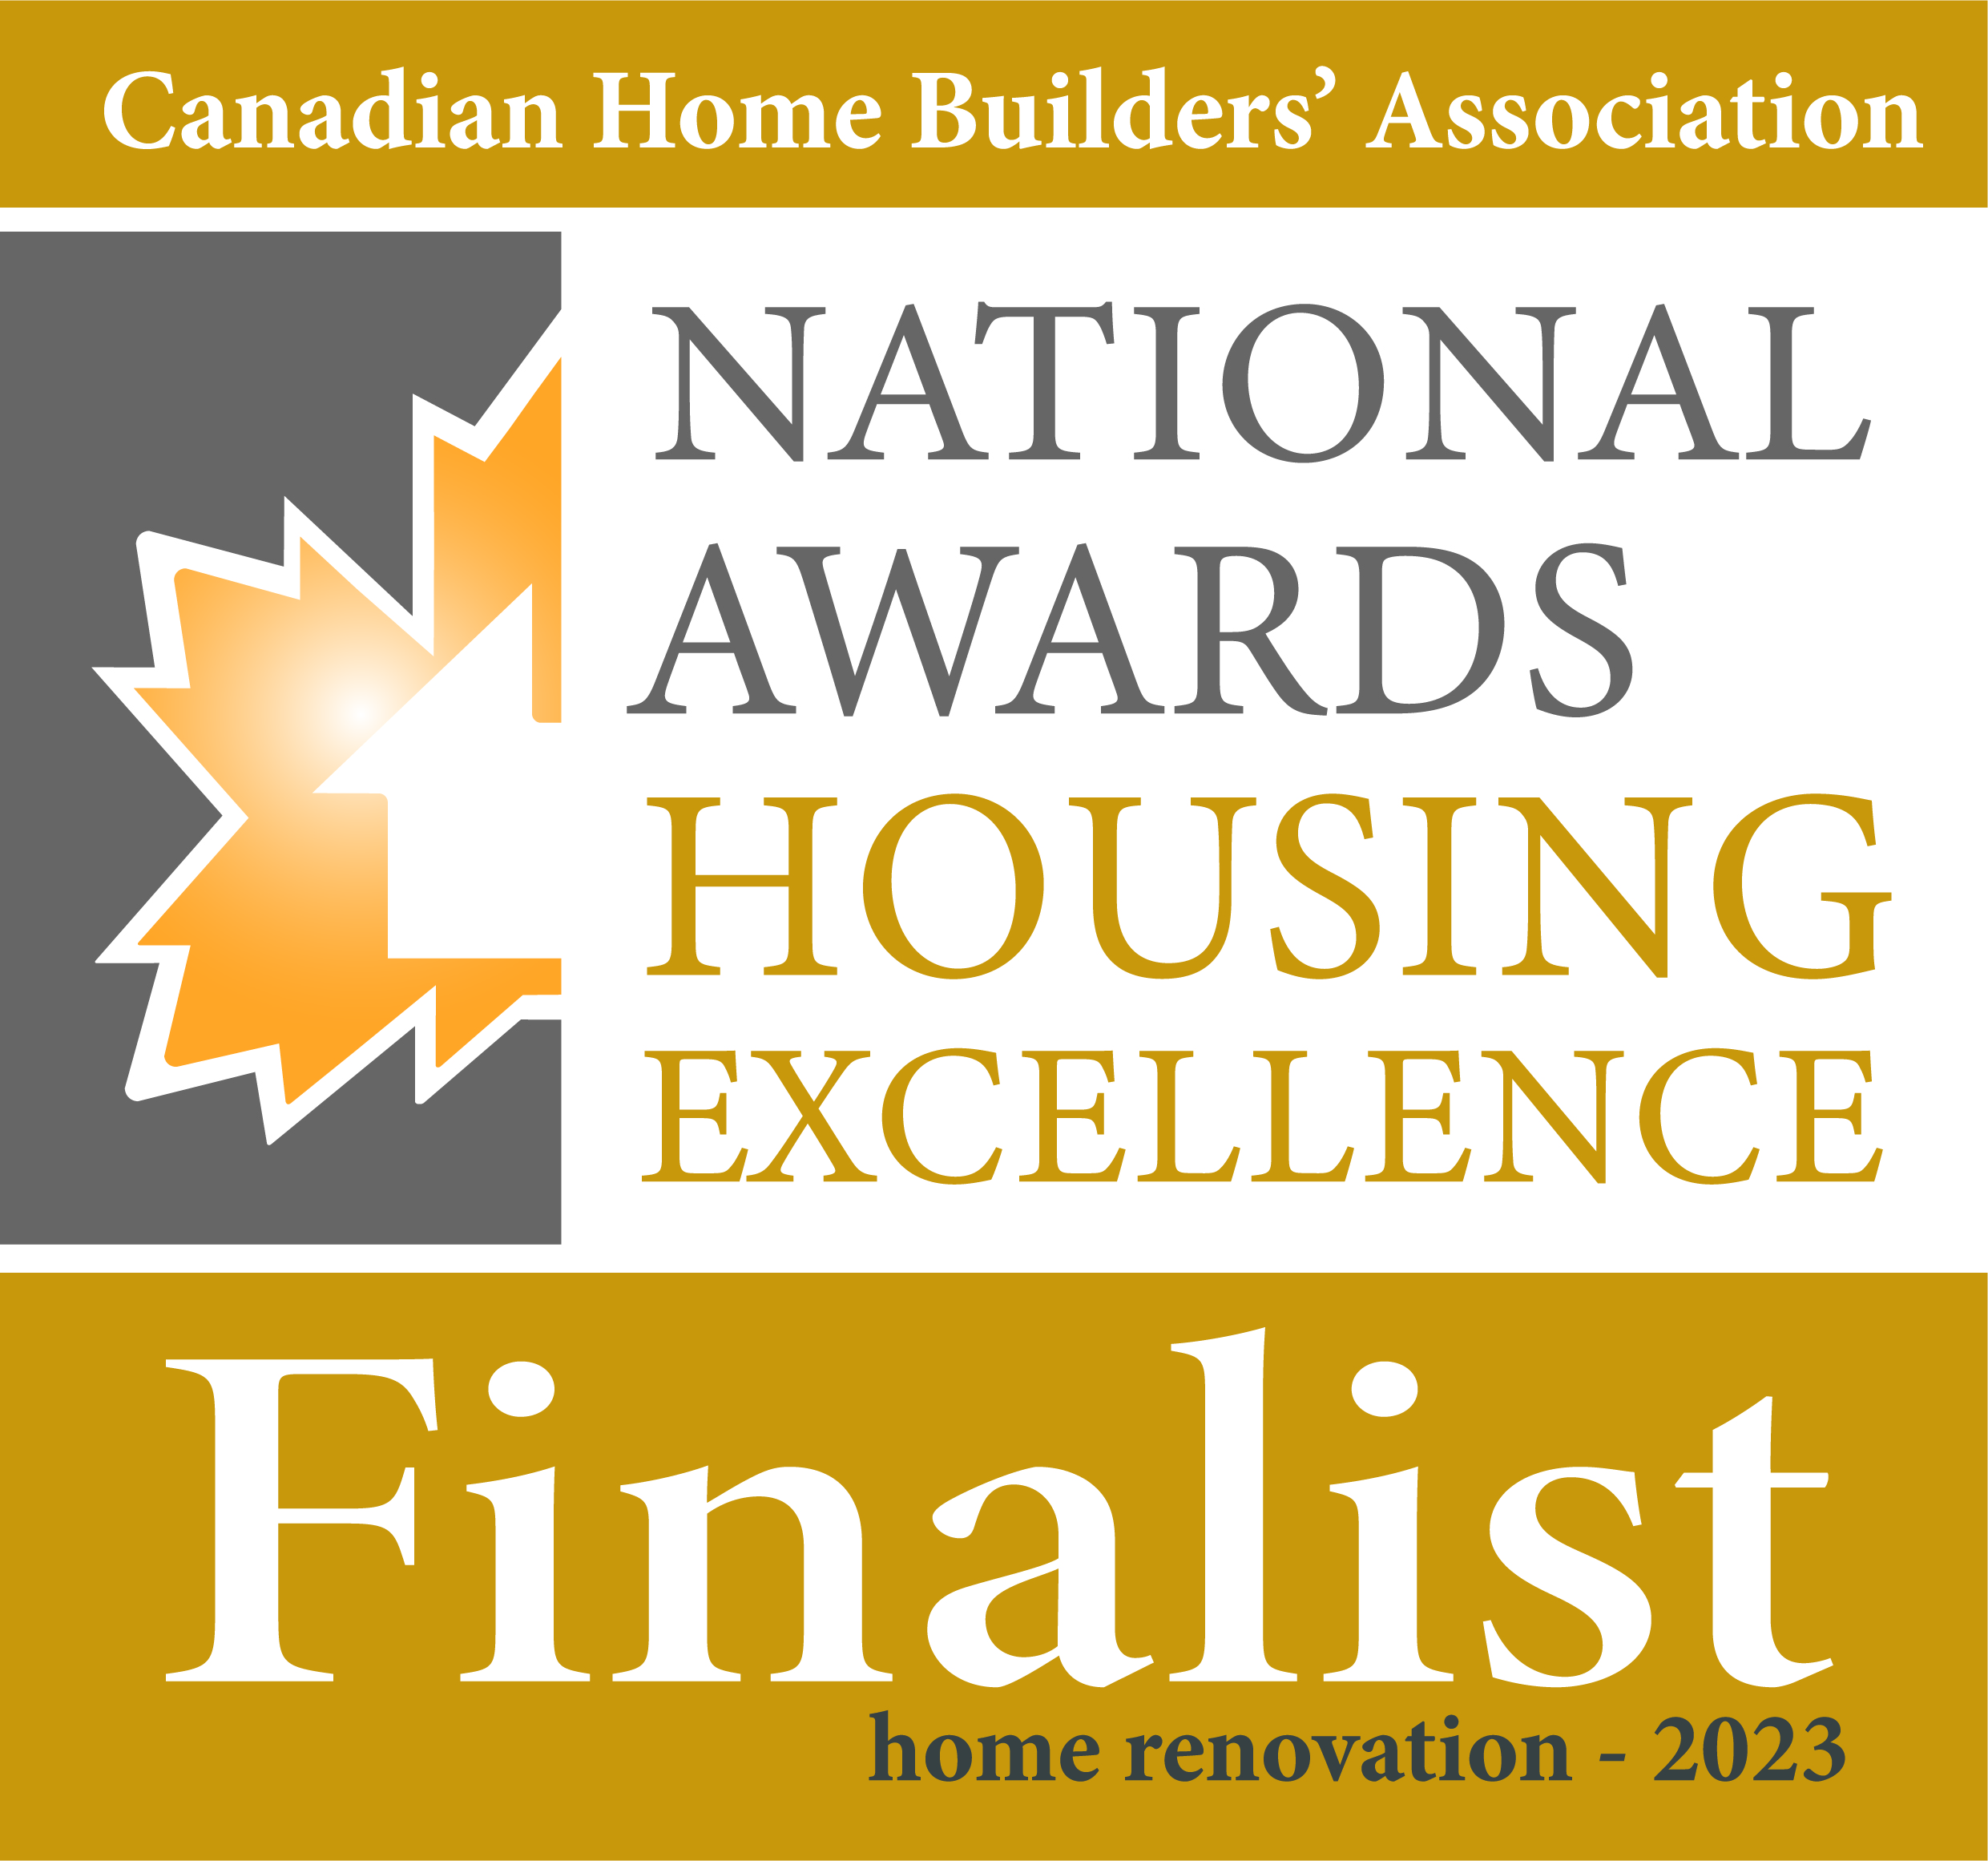 Canadian Home Builders' Association Finalist Award